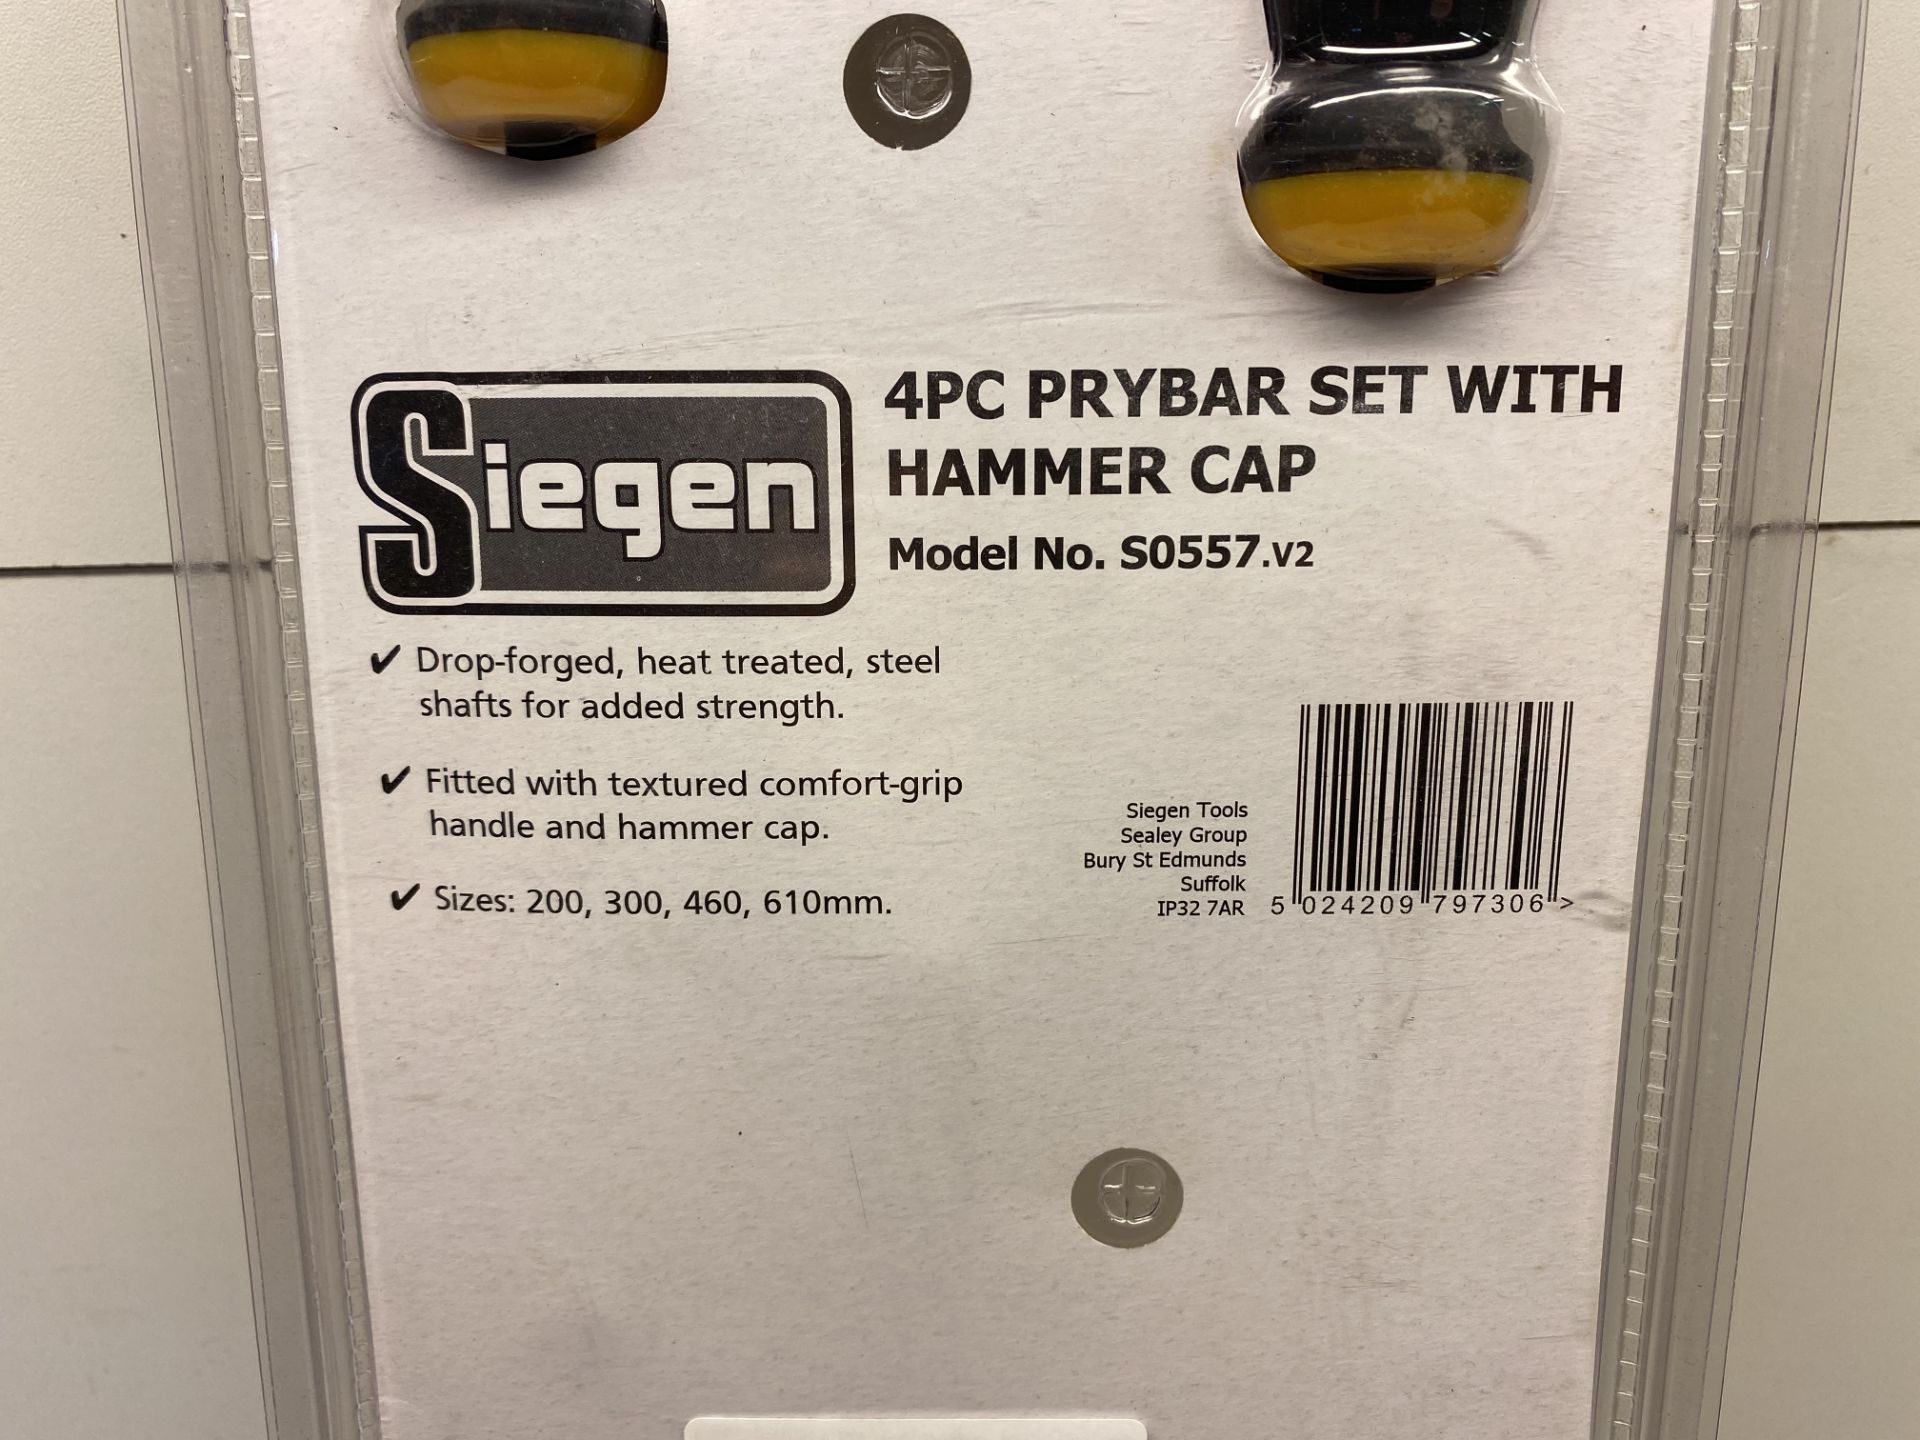 Siegen S0557 Prybar Set with Hammer Cap | 4pc | RRP £26.99 - Image 3 of 3